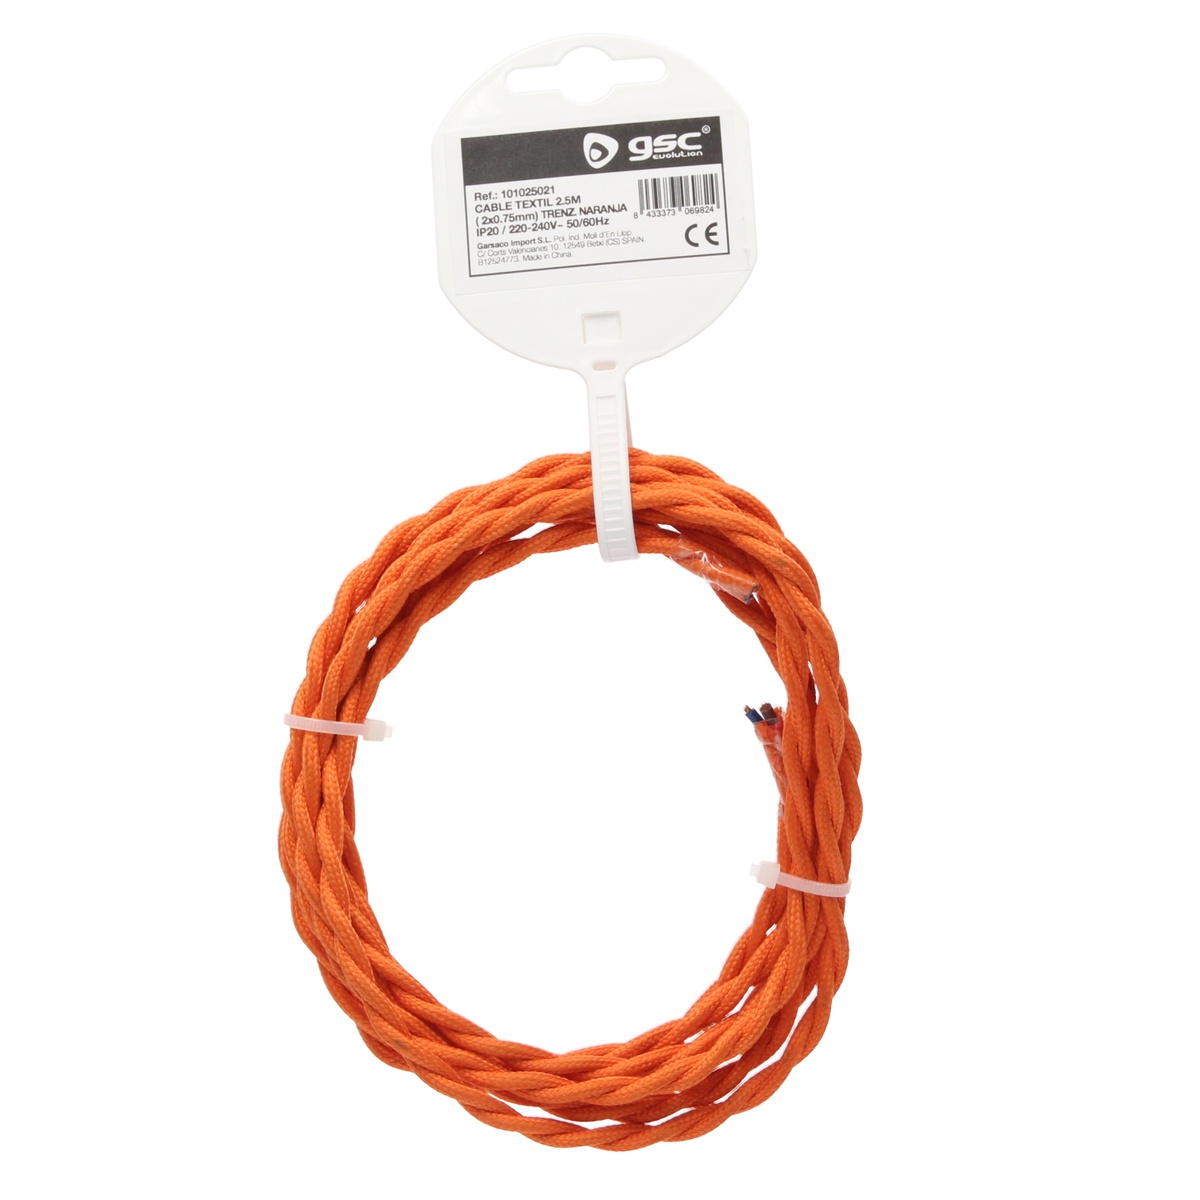 2.5m textile cable (2x0.75mm) Orange braided